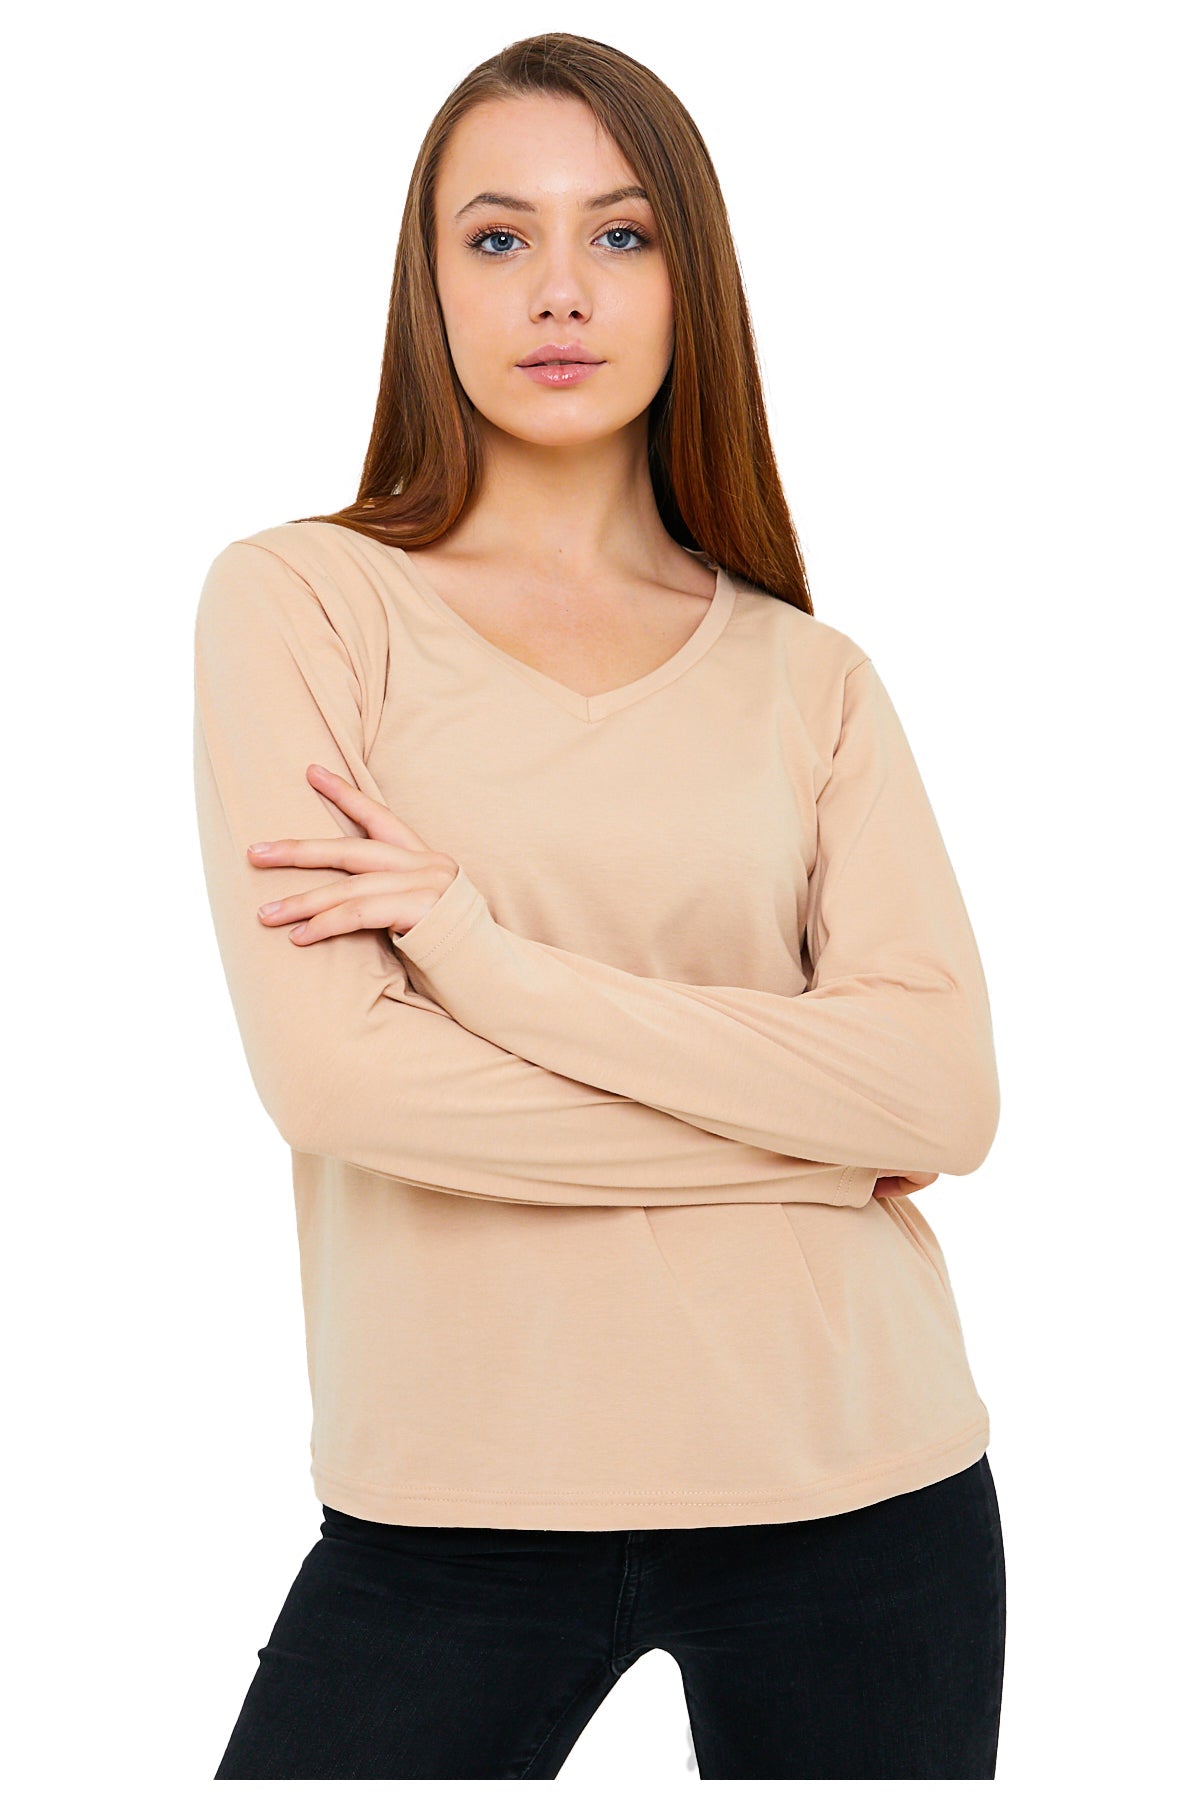 Long Sleeve V-Neck Shirts for Women & Girls - Colorful Pima Cotton-72